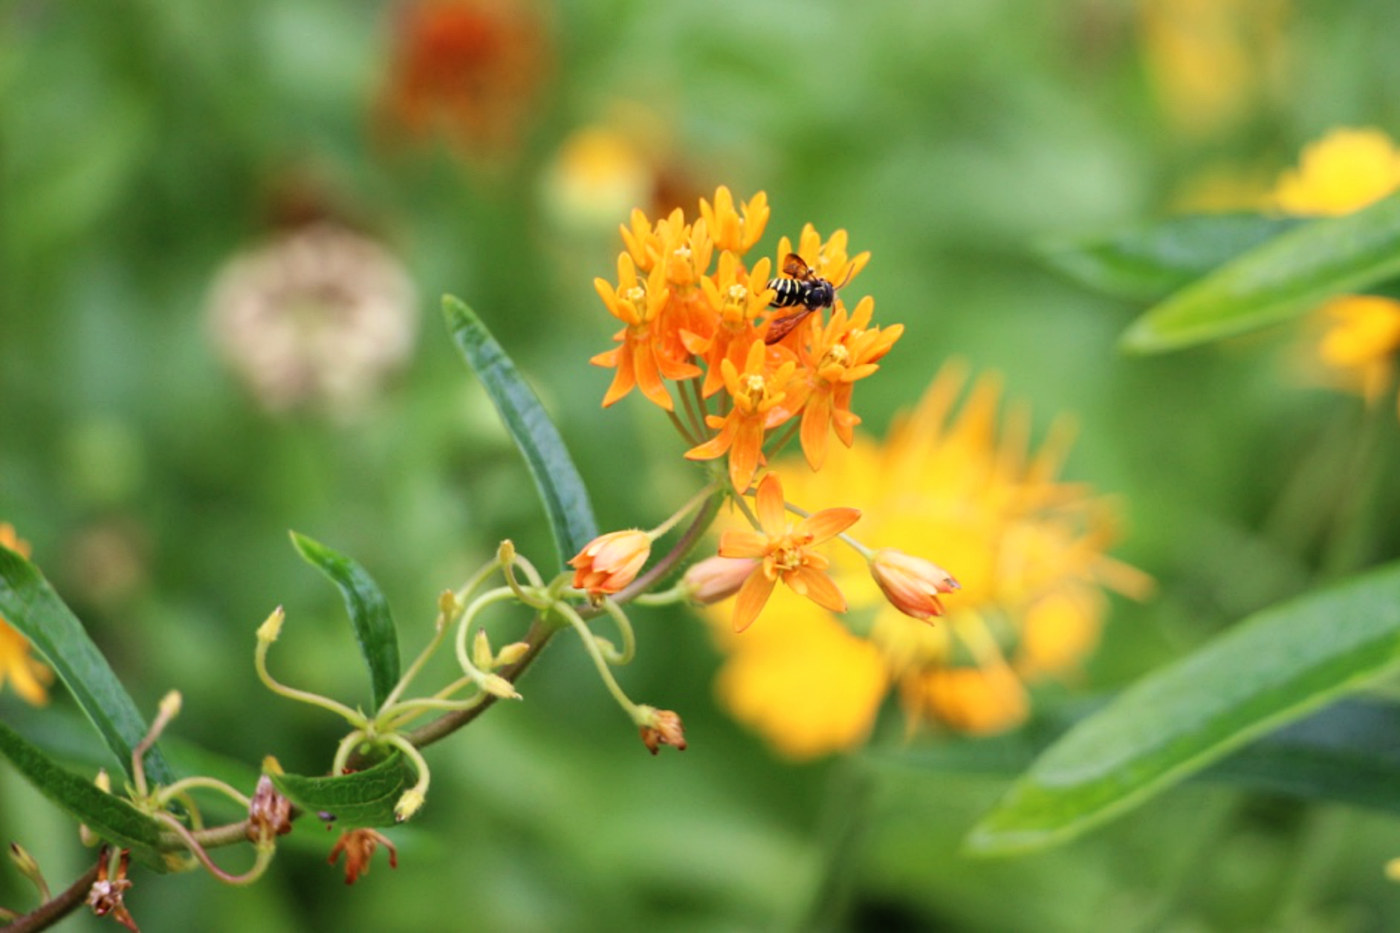 A single bee on an orange flower against green foilage